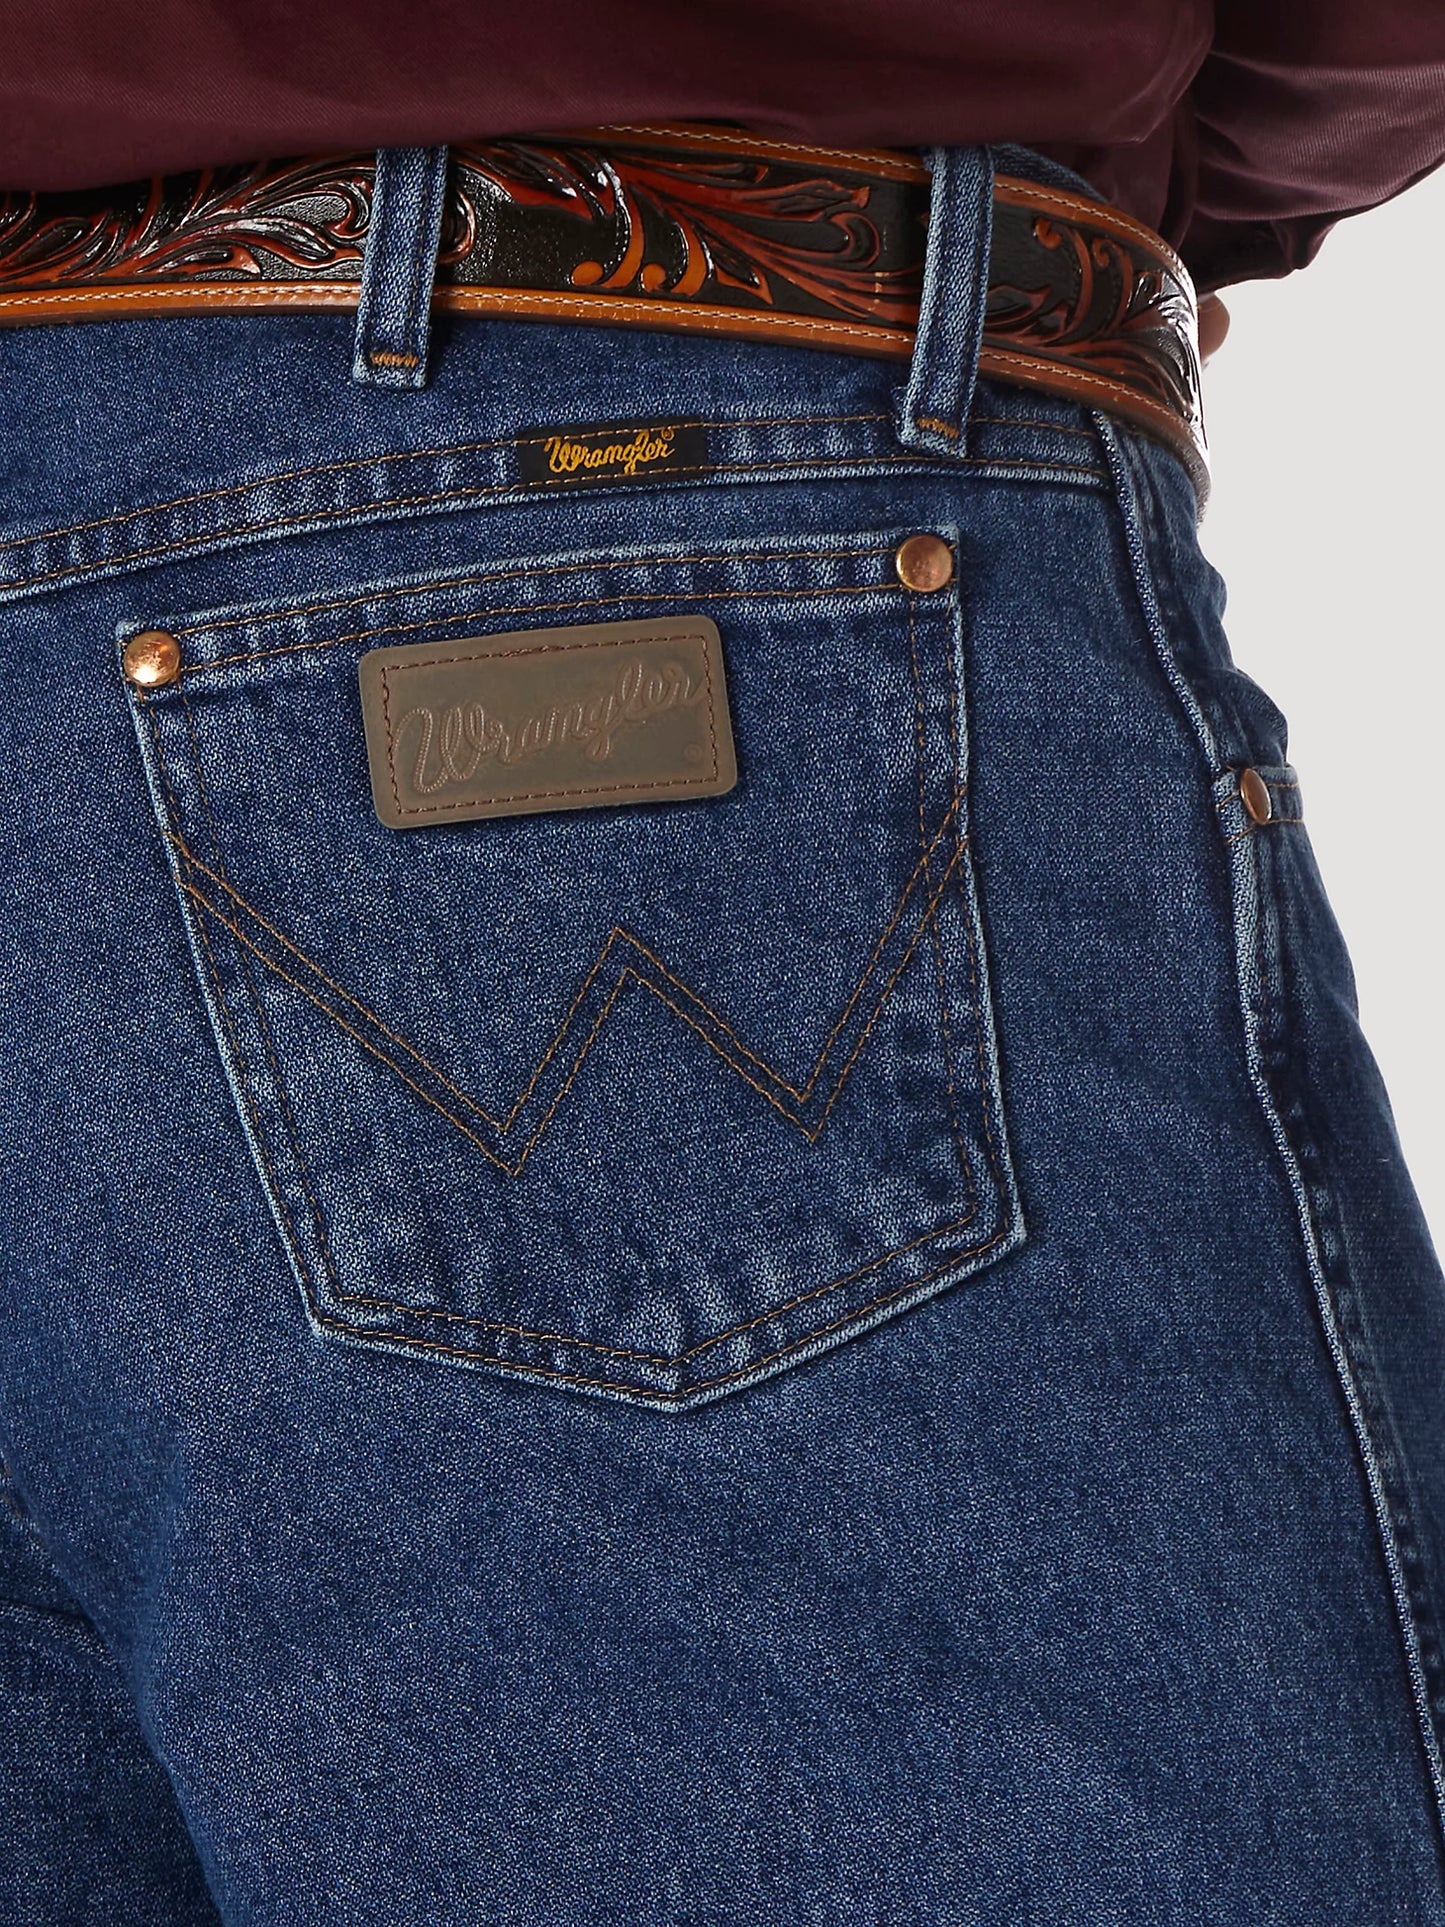 Wrangler® Men's Cowboy Cut 13MWZ Stonewashed Denim Jeans